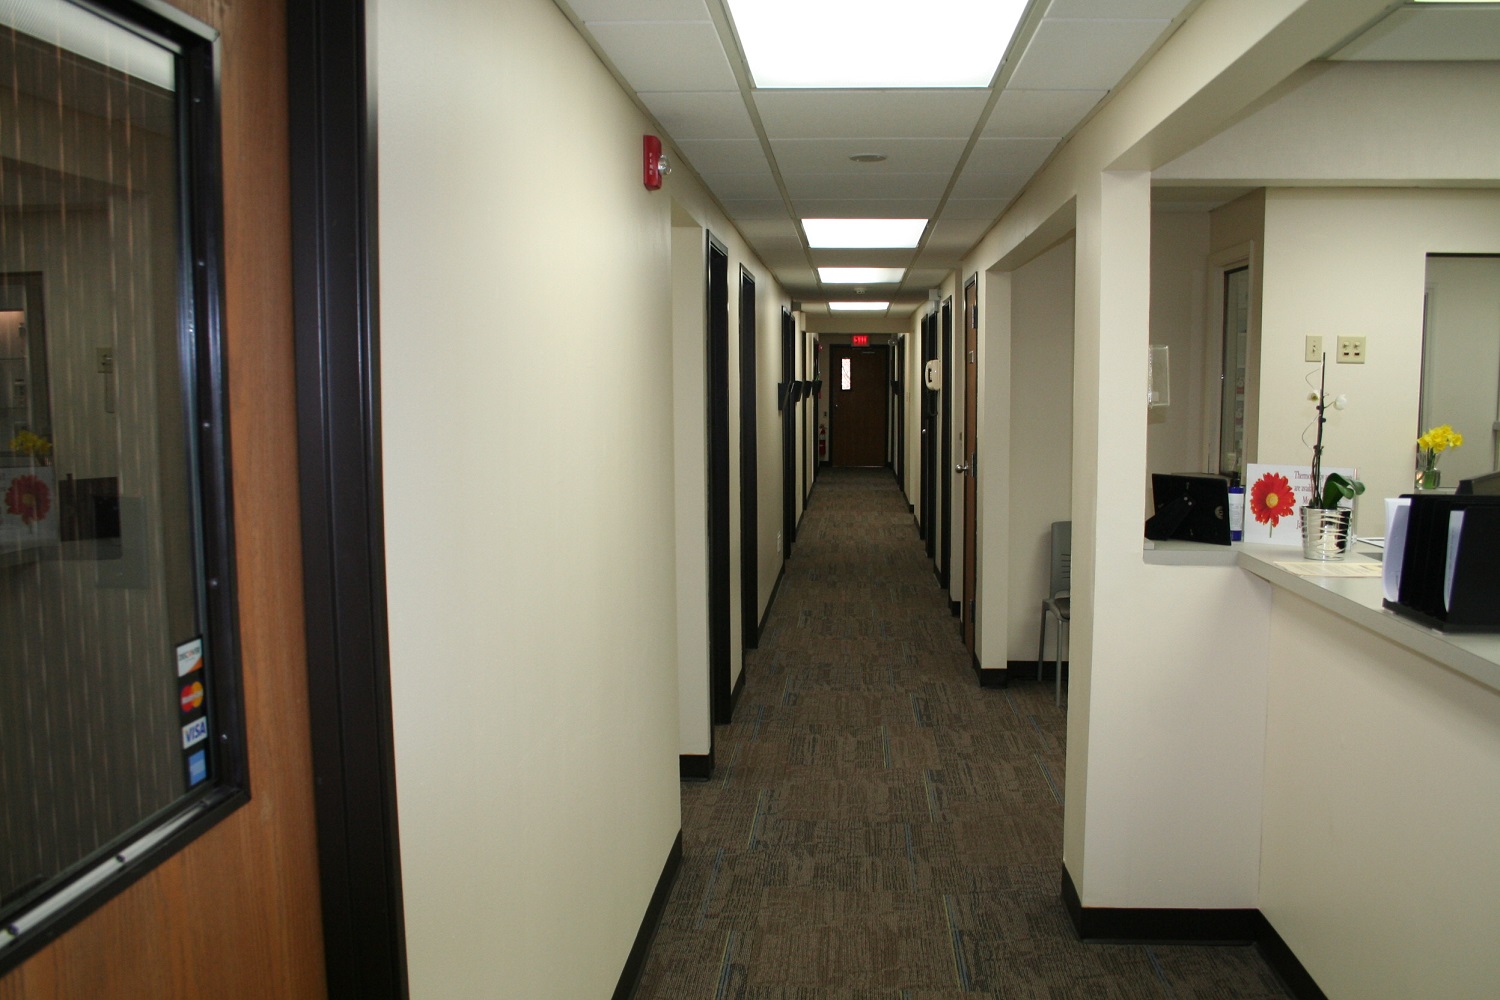 Interior - Hallway Area.jpg